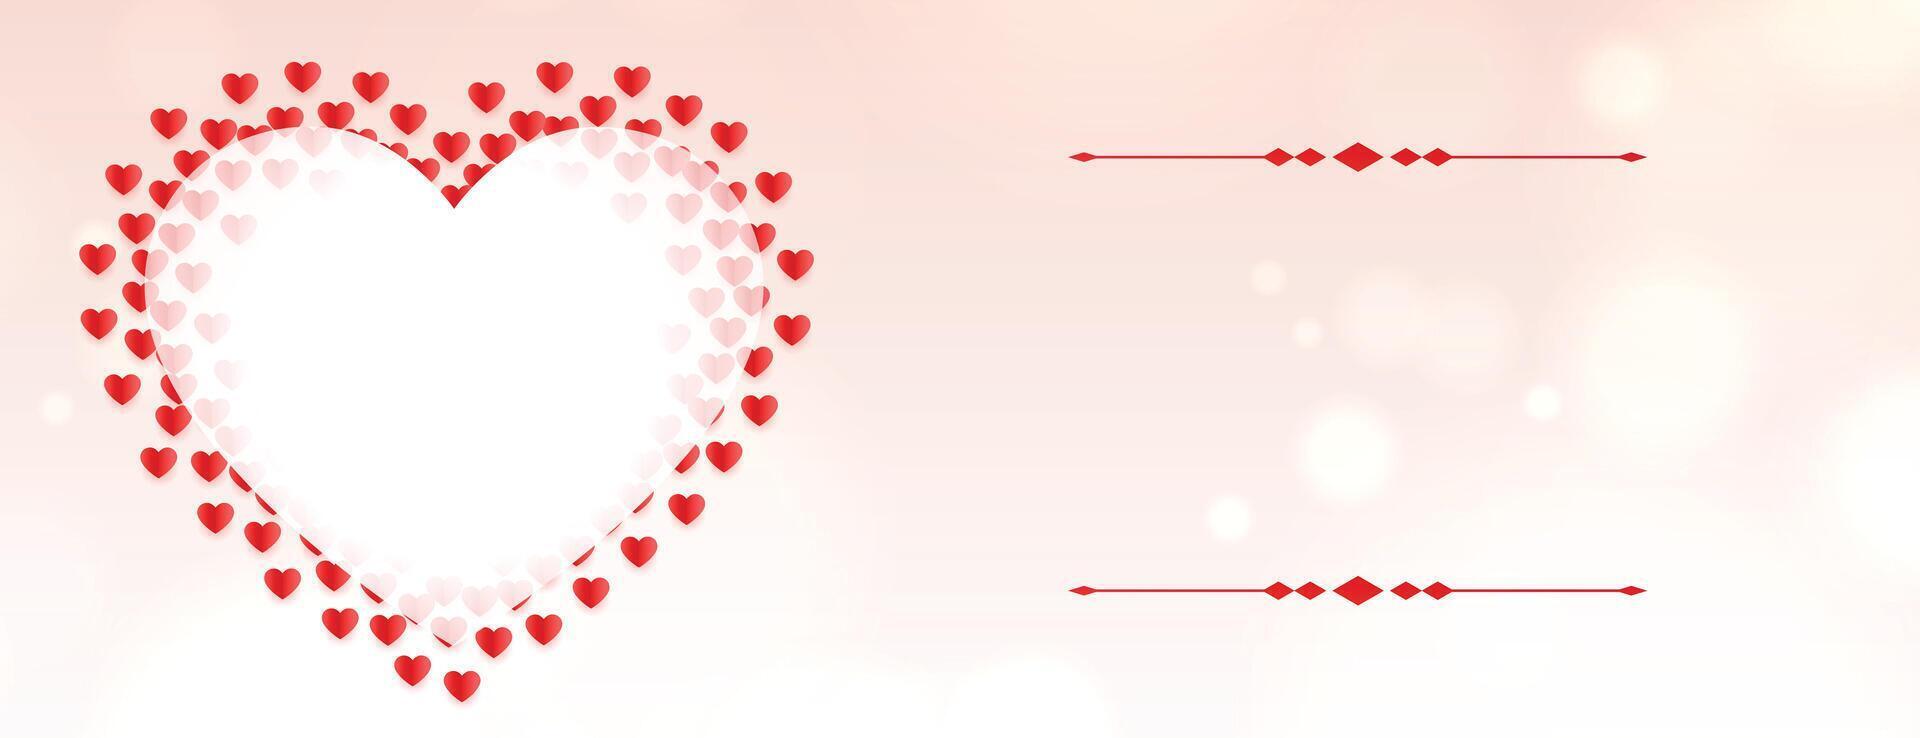 valentines day hearts banner romantic design vector